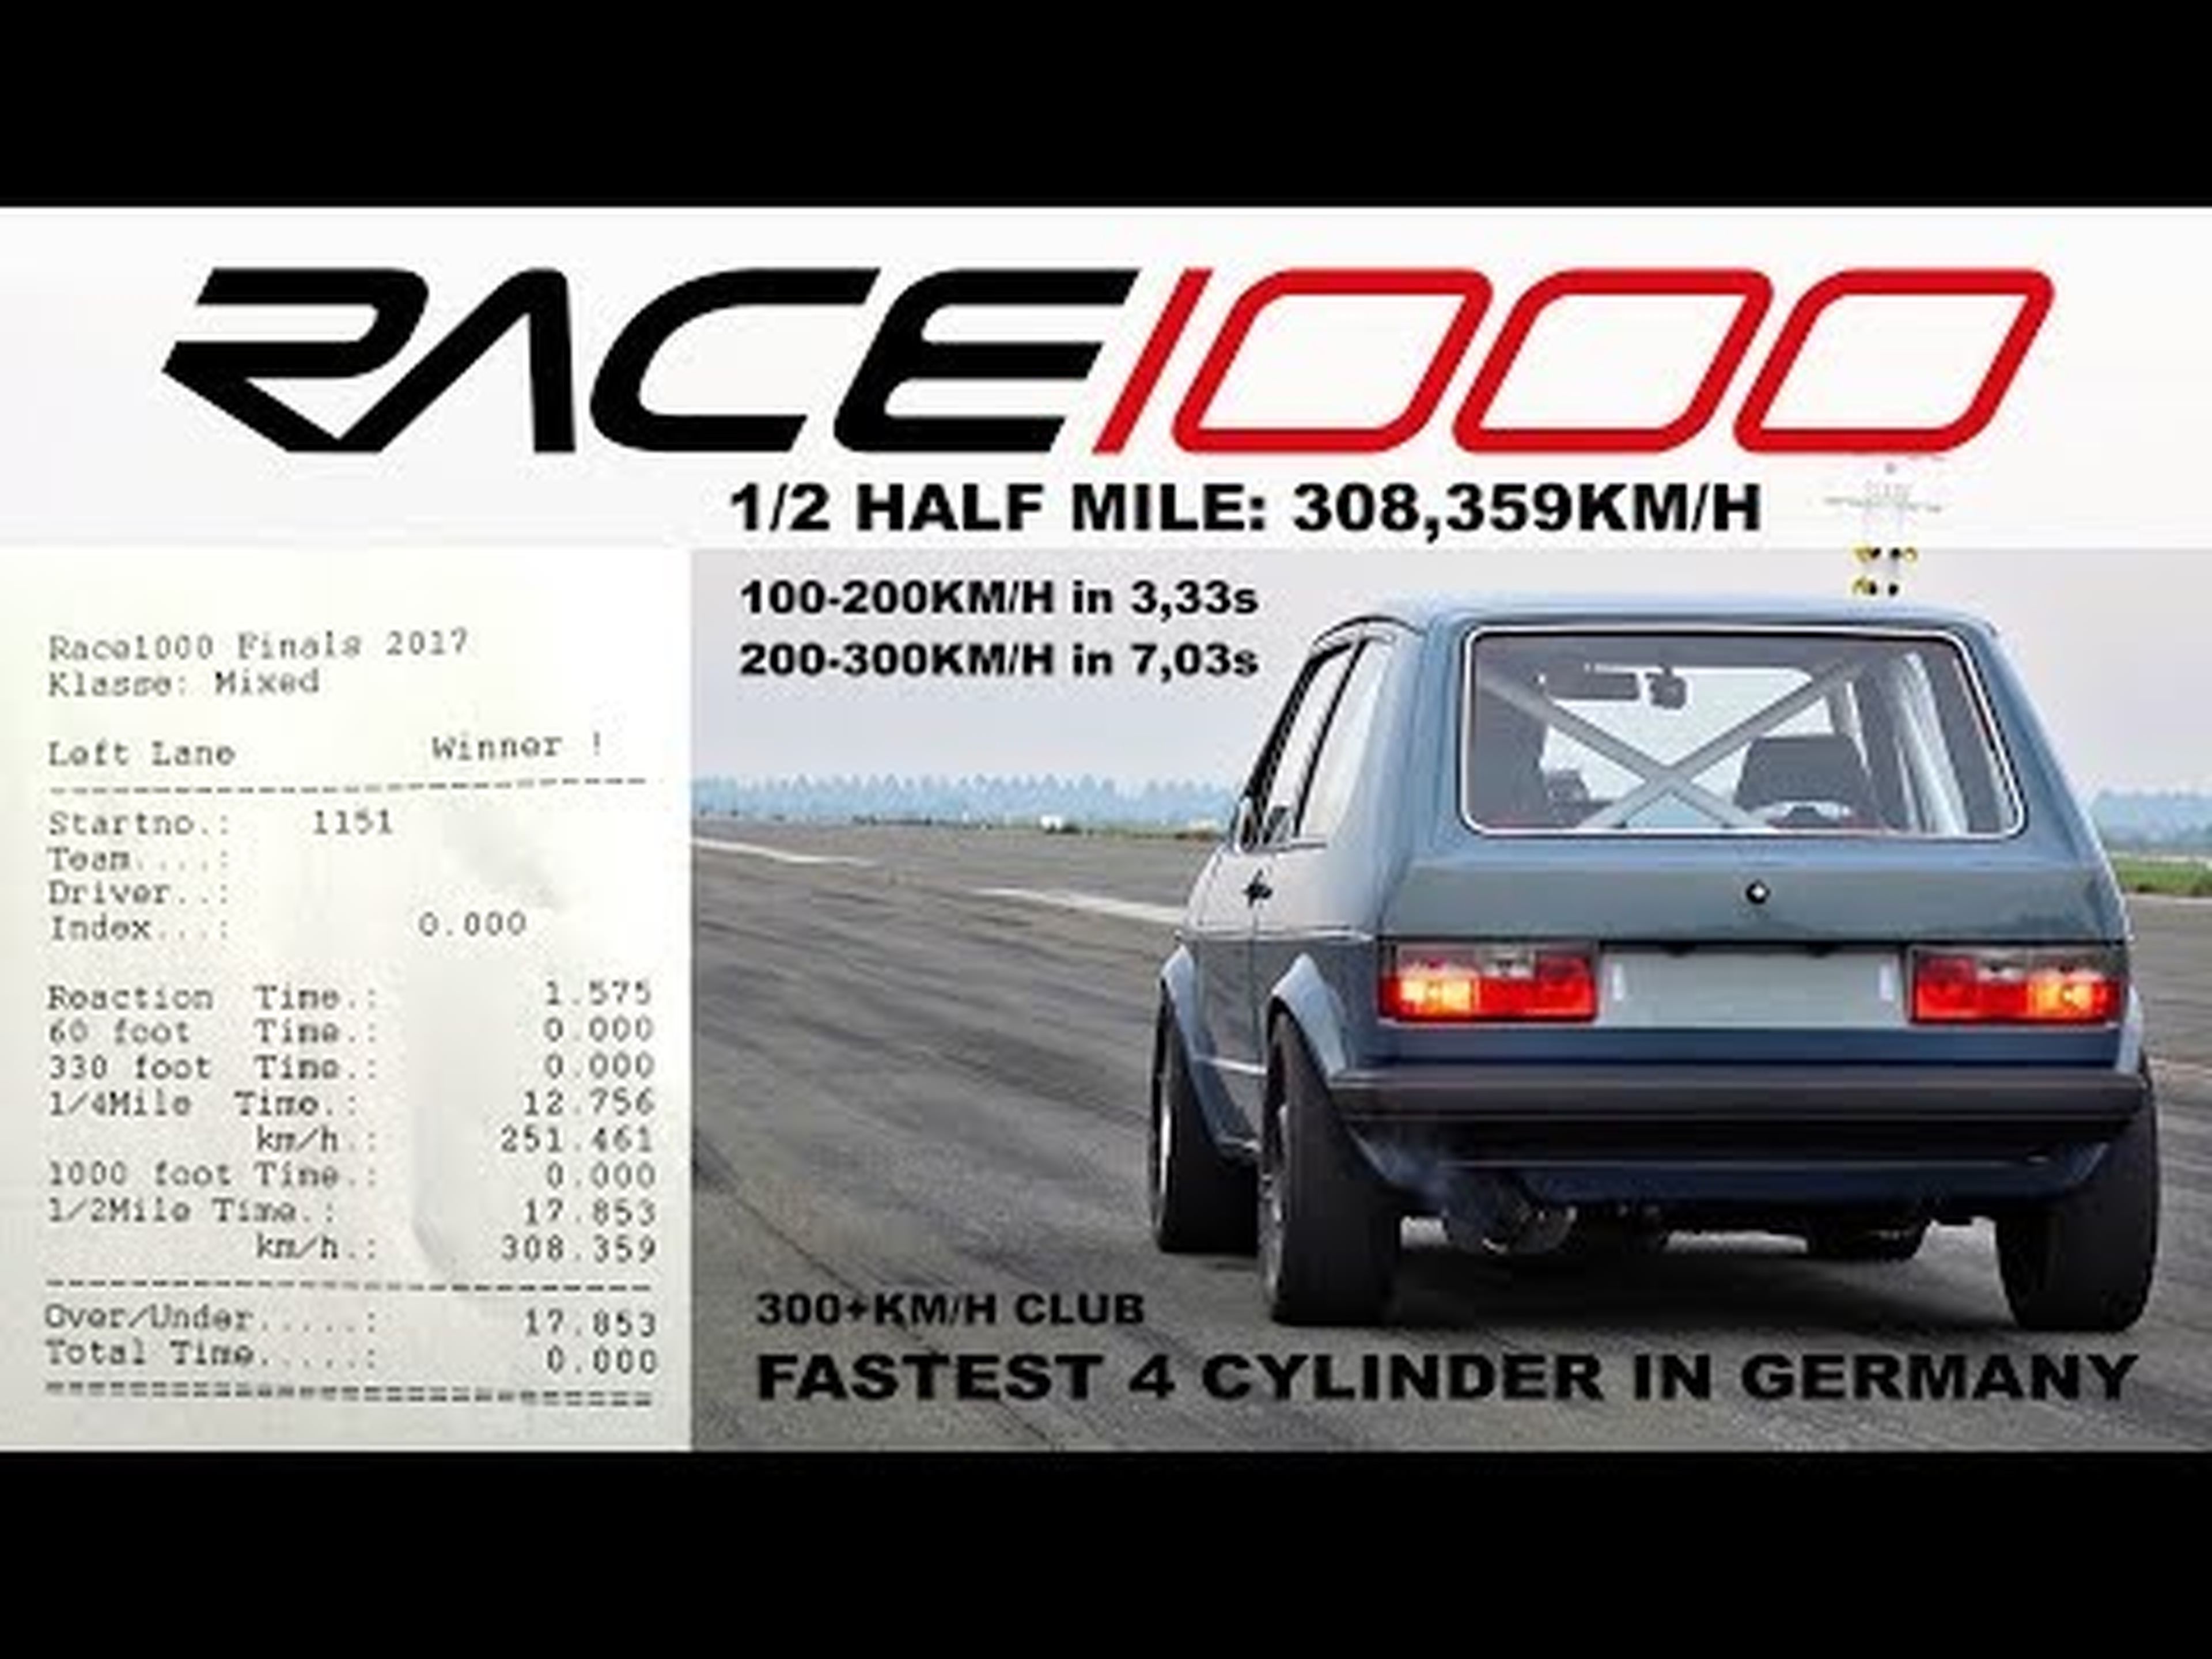 VW Golf Mk1 AWD 1000+HP RACE 1000 Half Mile 308kmh 2017